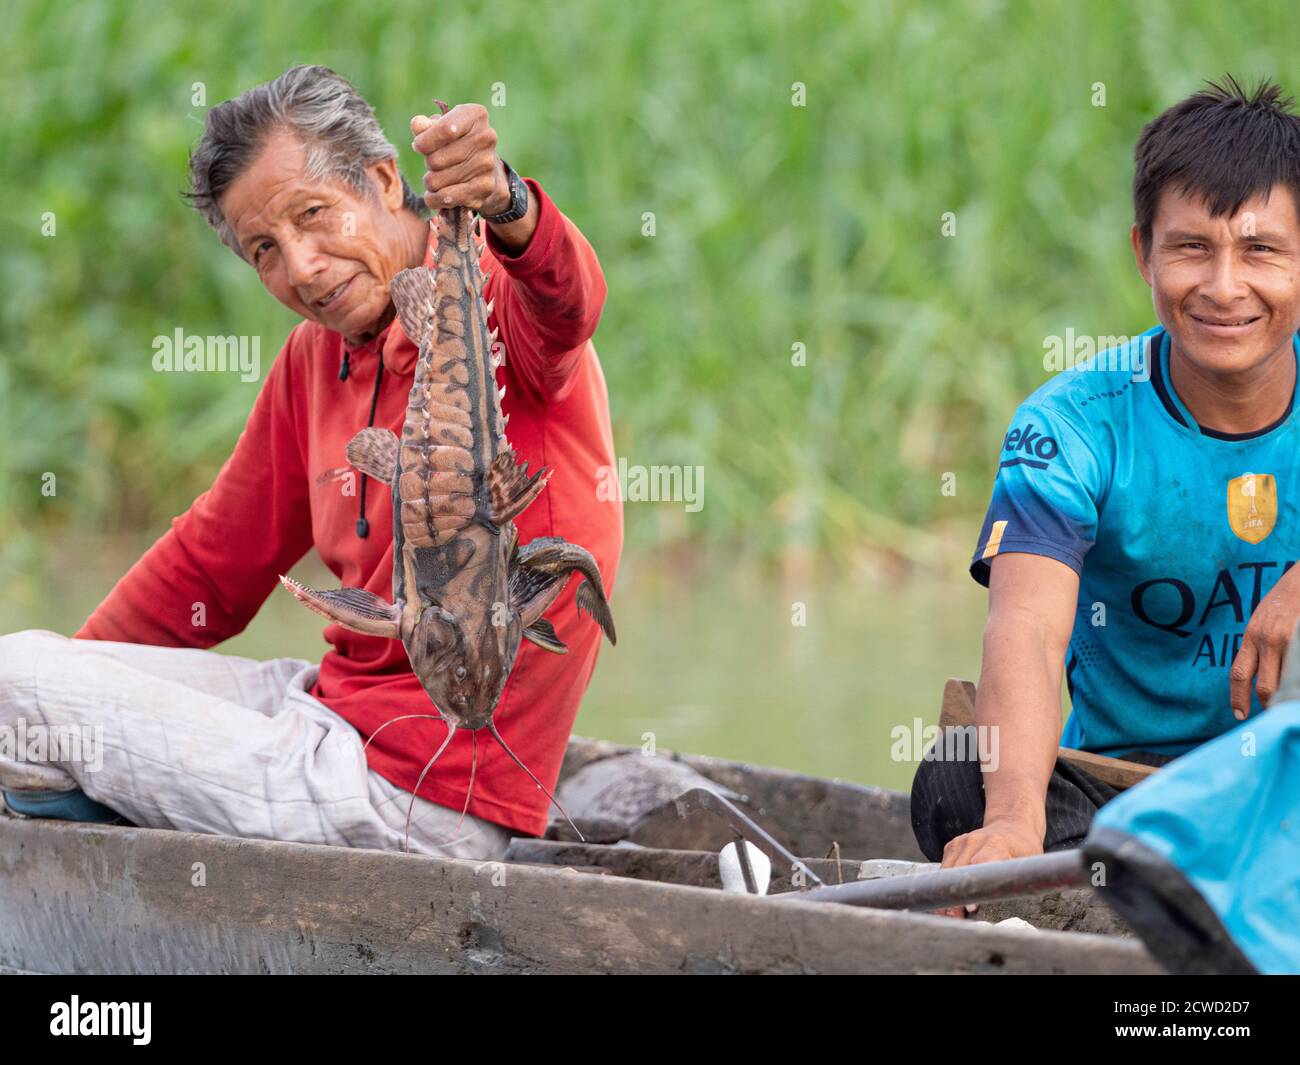 Fisherman displaying catfish caught by net on Oxbow lake Atun Poza, Iquitos, Peru. Stock Photo